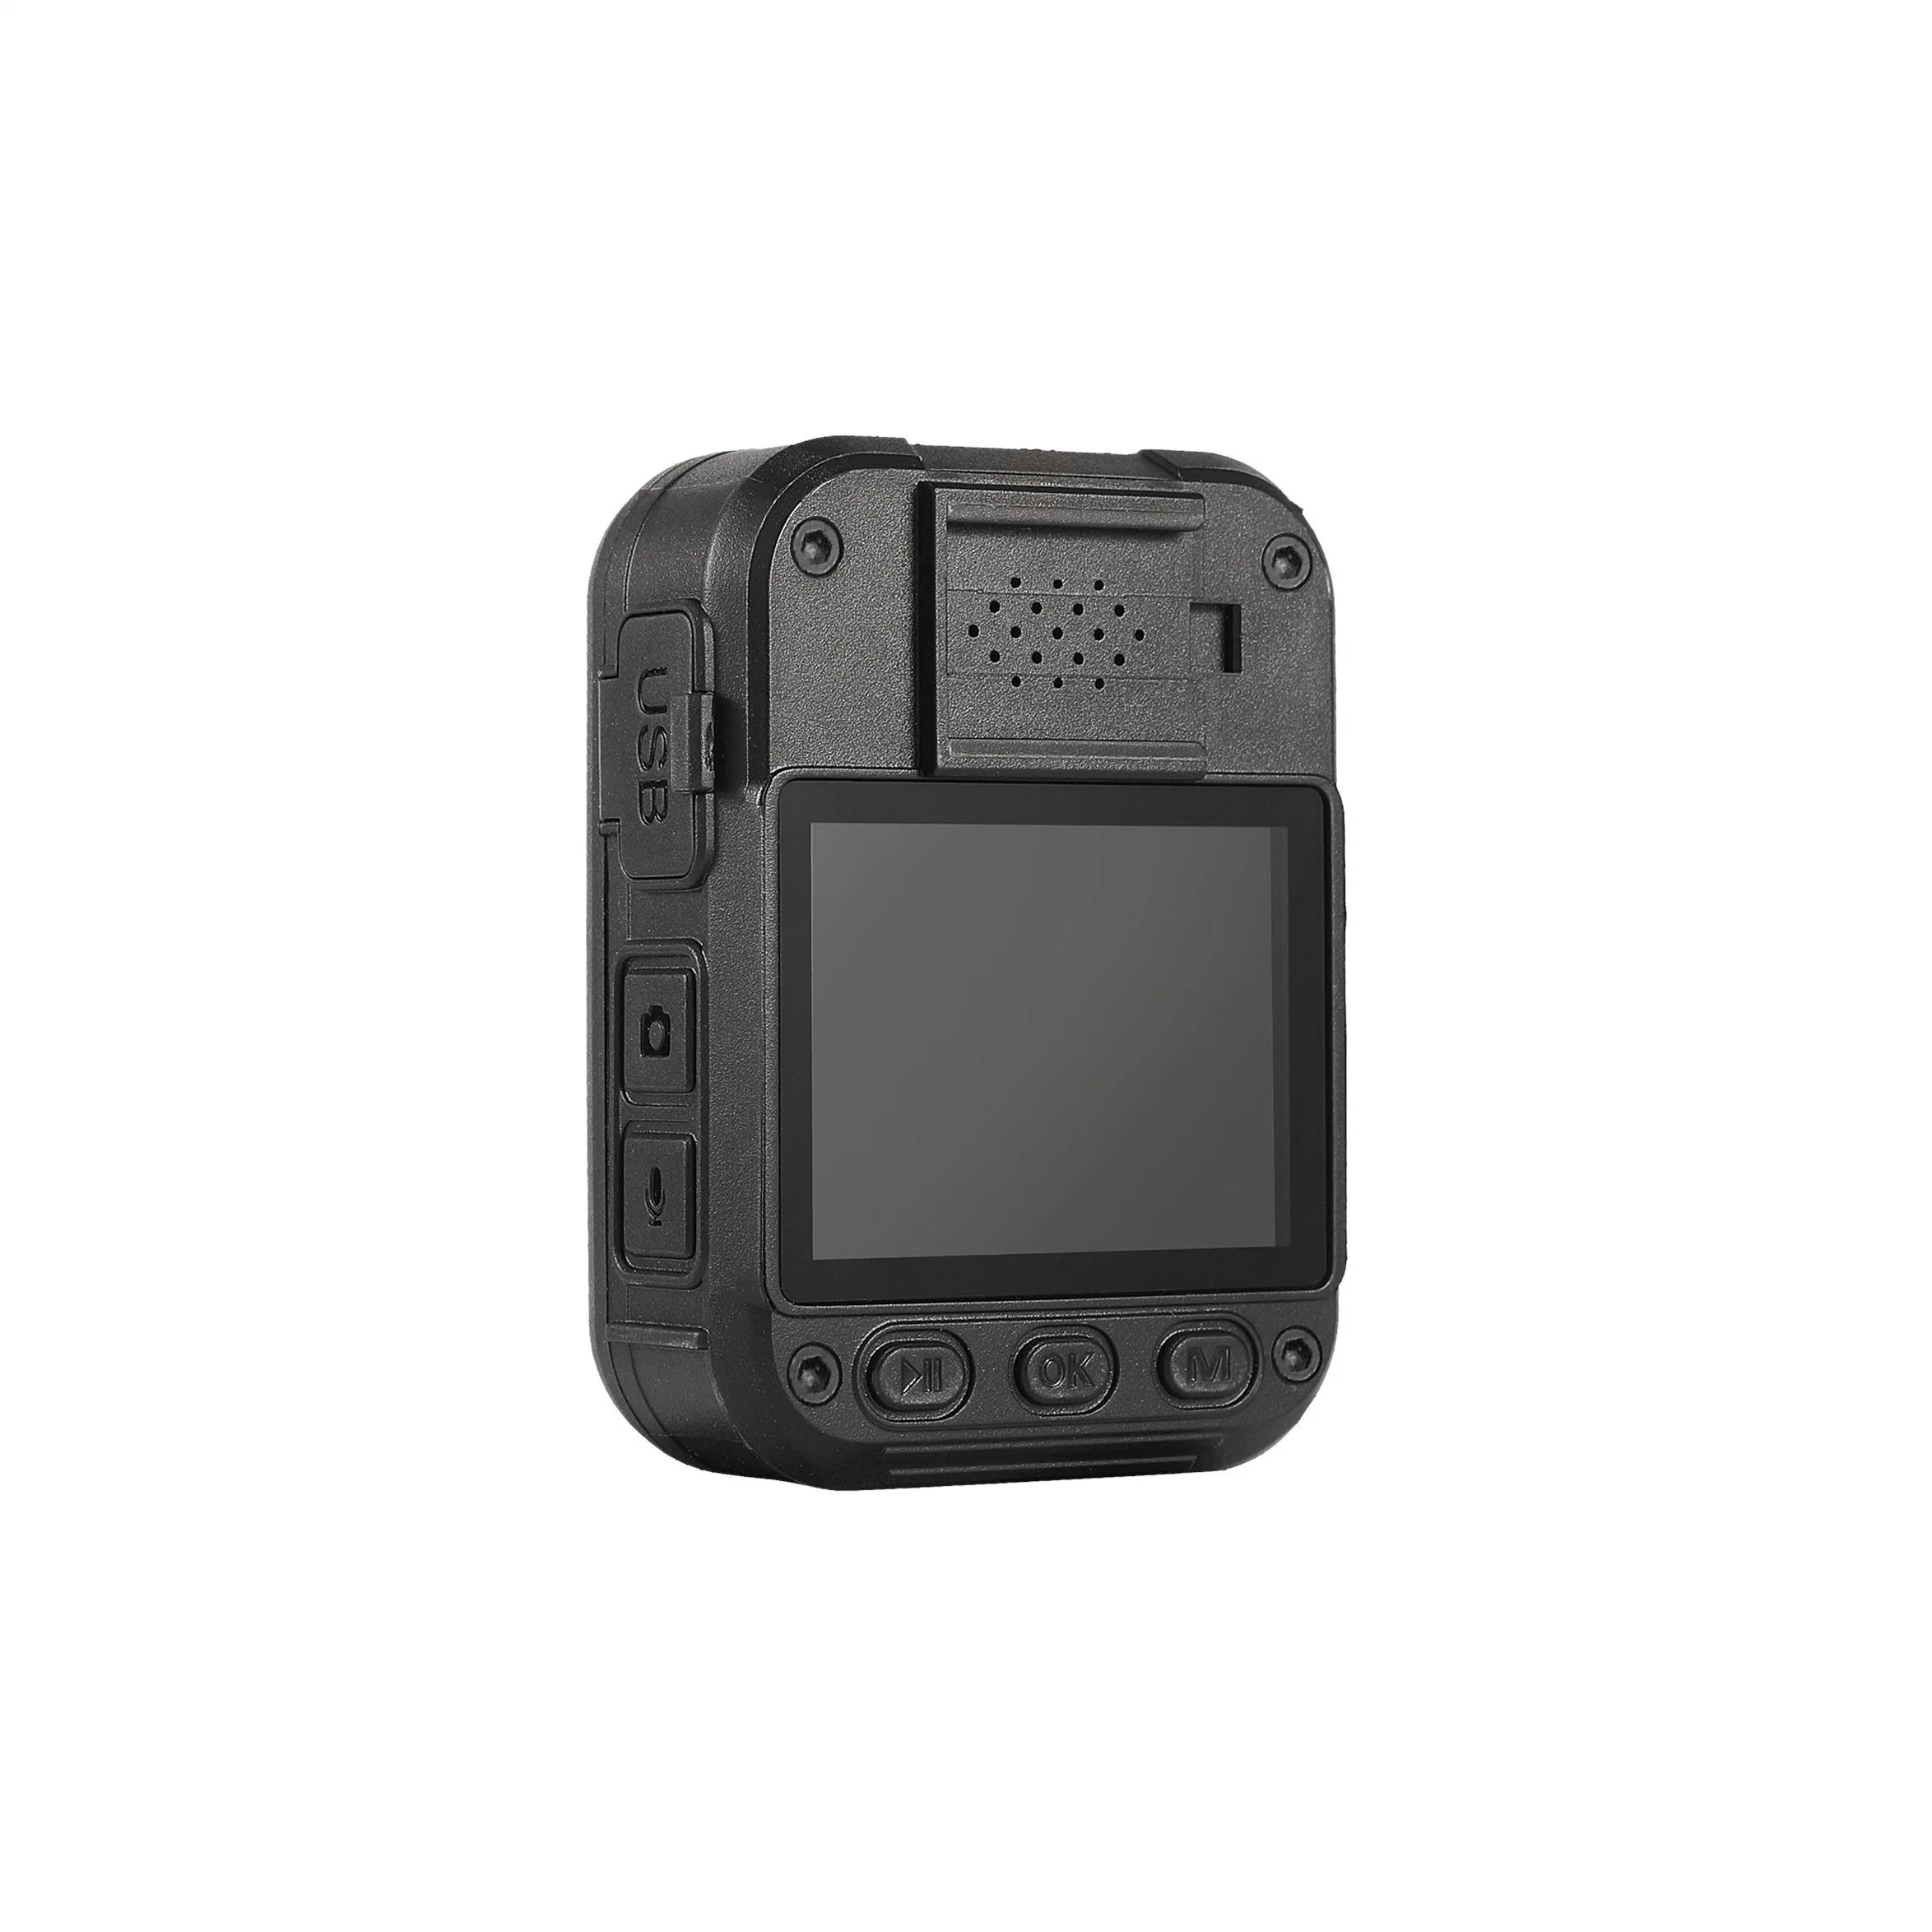 Eeyelog 1296p HD Body Worn Camera 64GB Camcorder 3000mAh Audio Infrared Night Vision Use in Car Driving